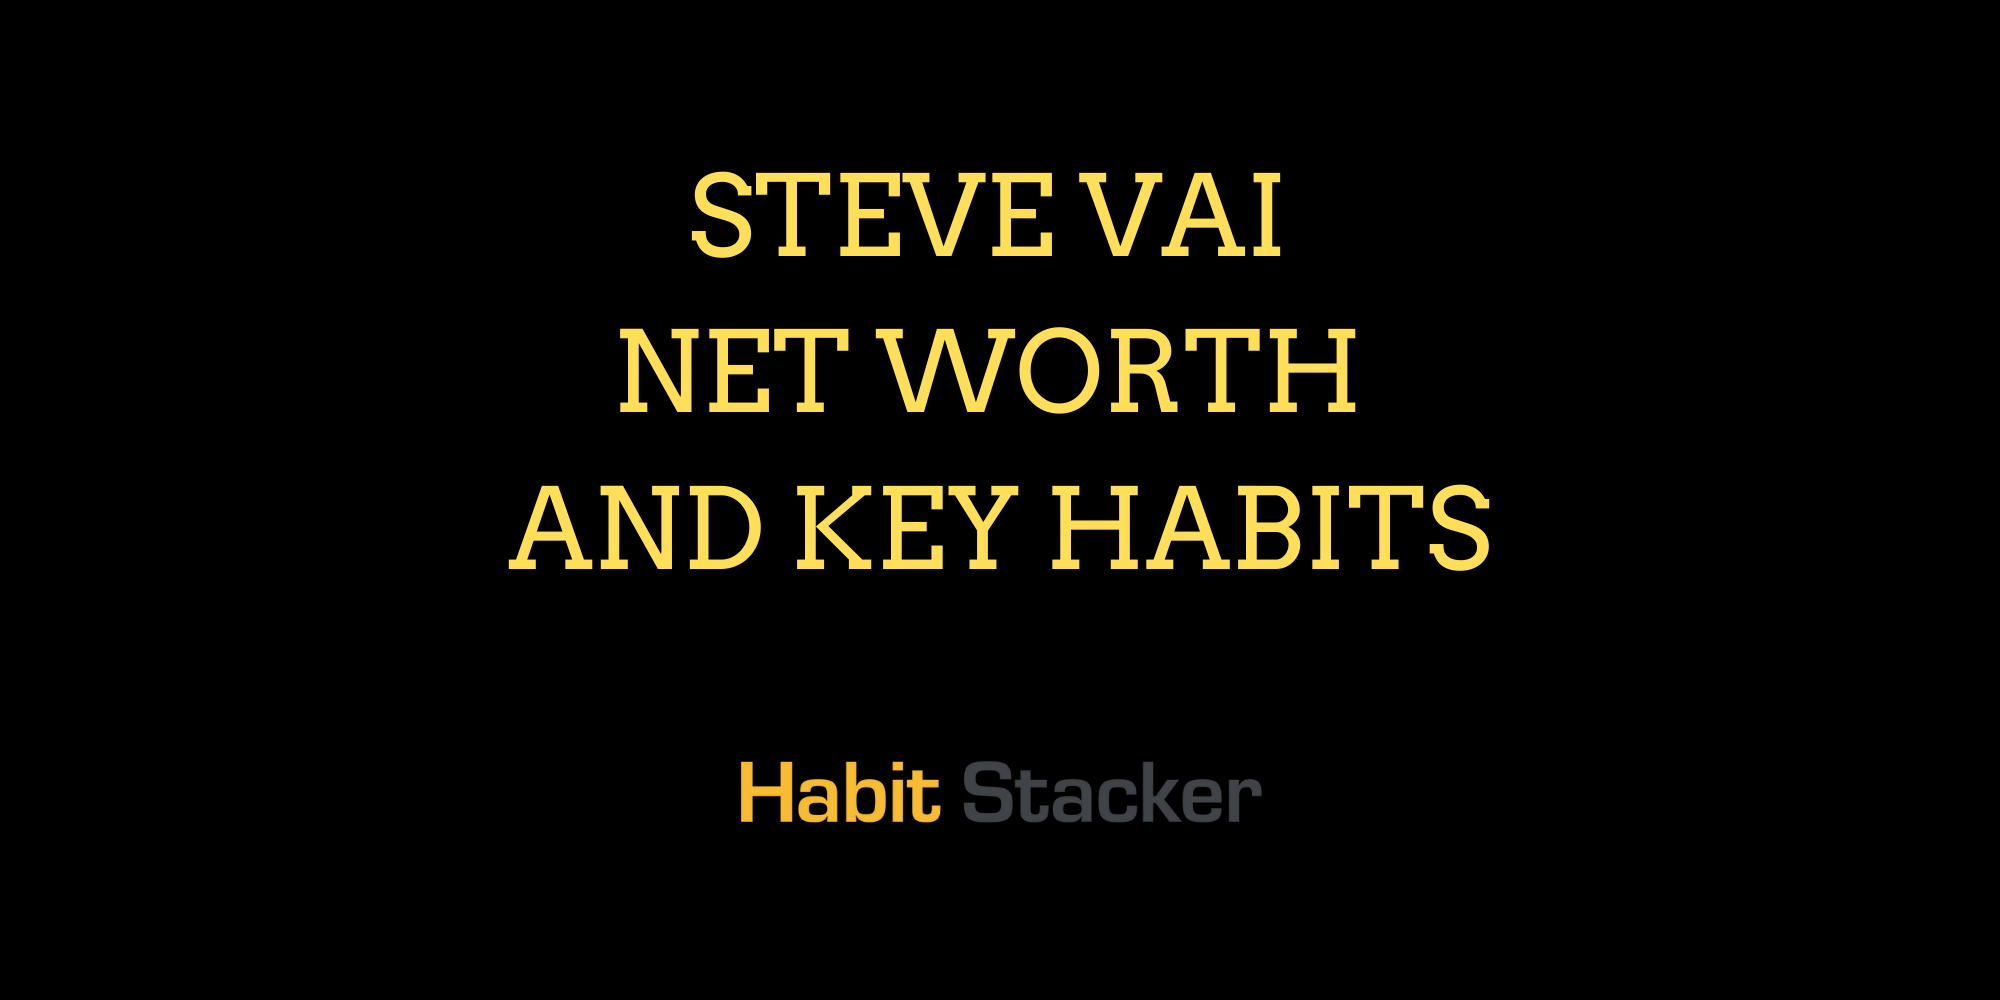 Steve Vai Net Worth and Key Habits